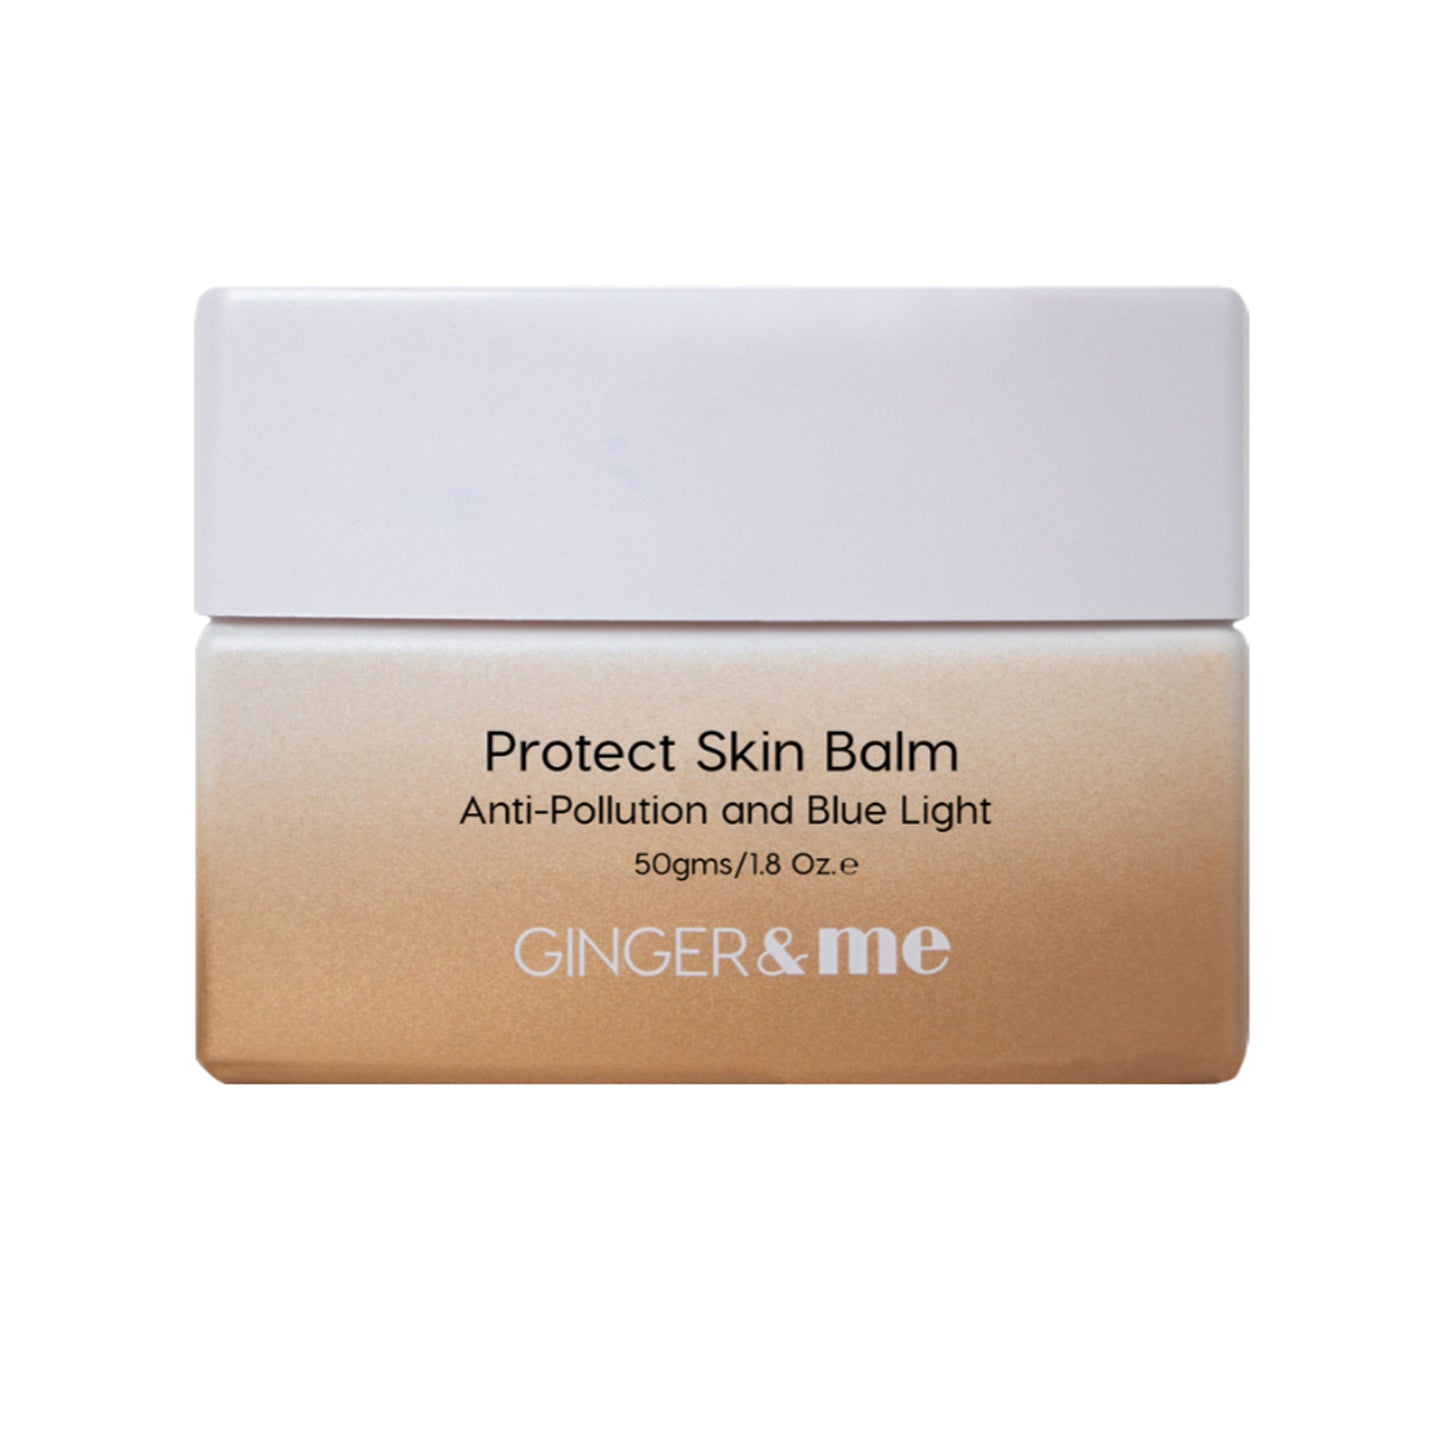 Protect Skin Balm 50g